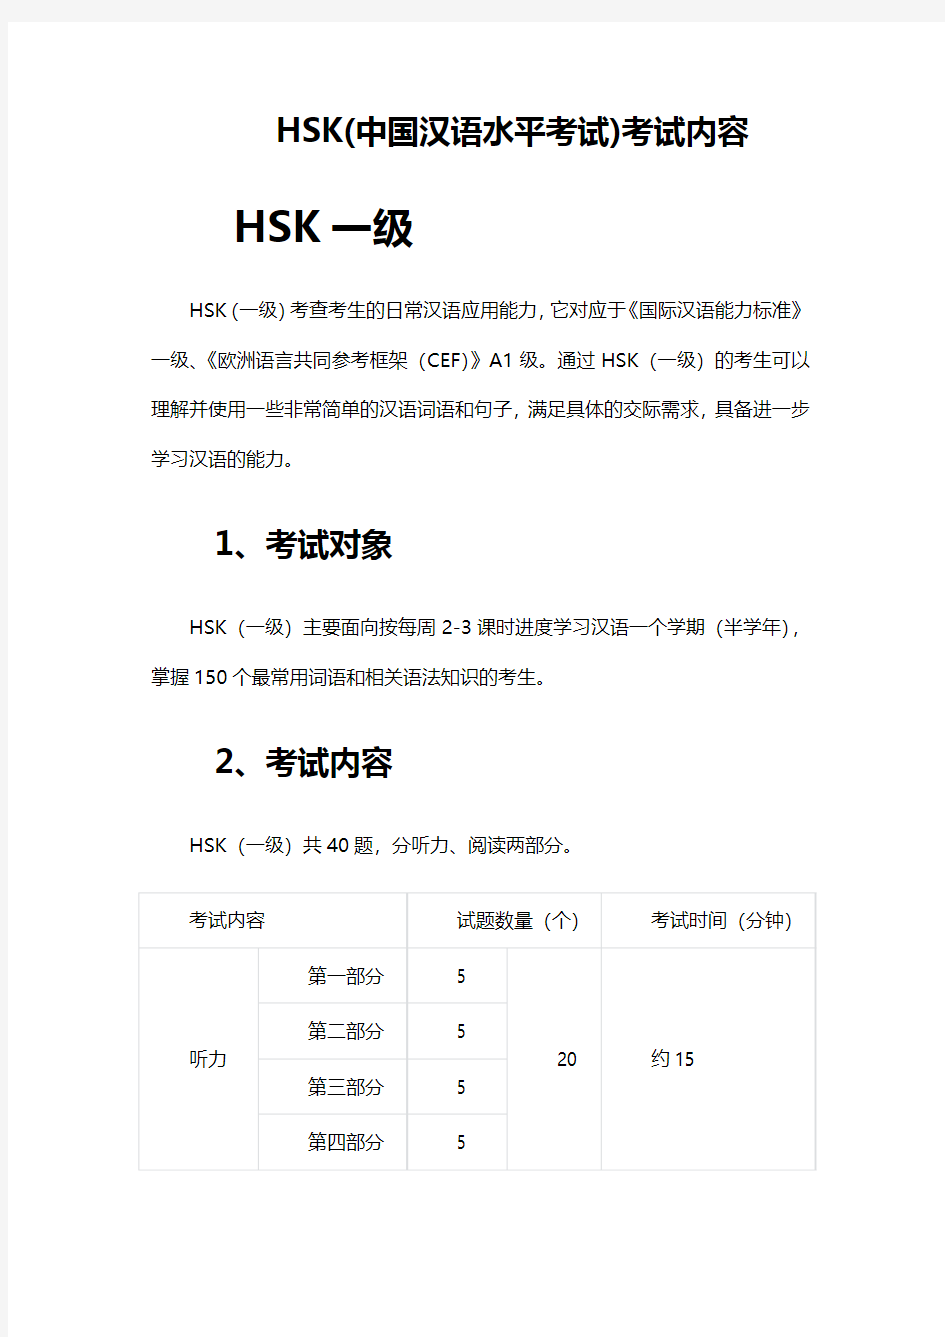 HSK(中国汉语水平考试)考试内容